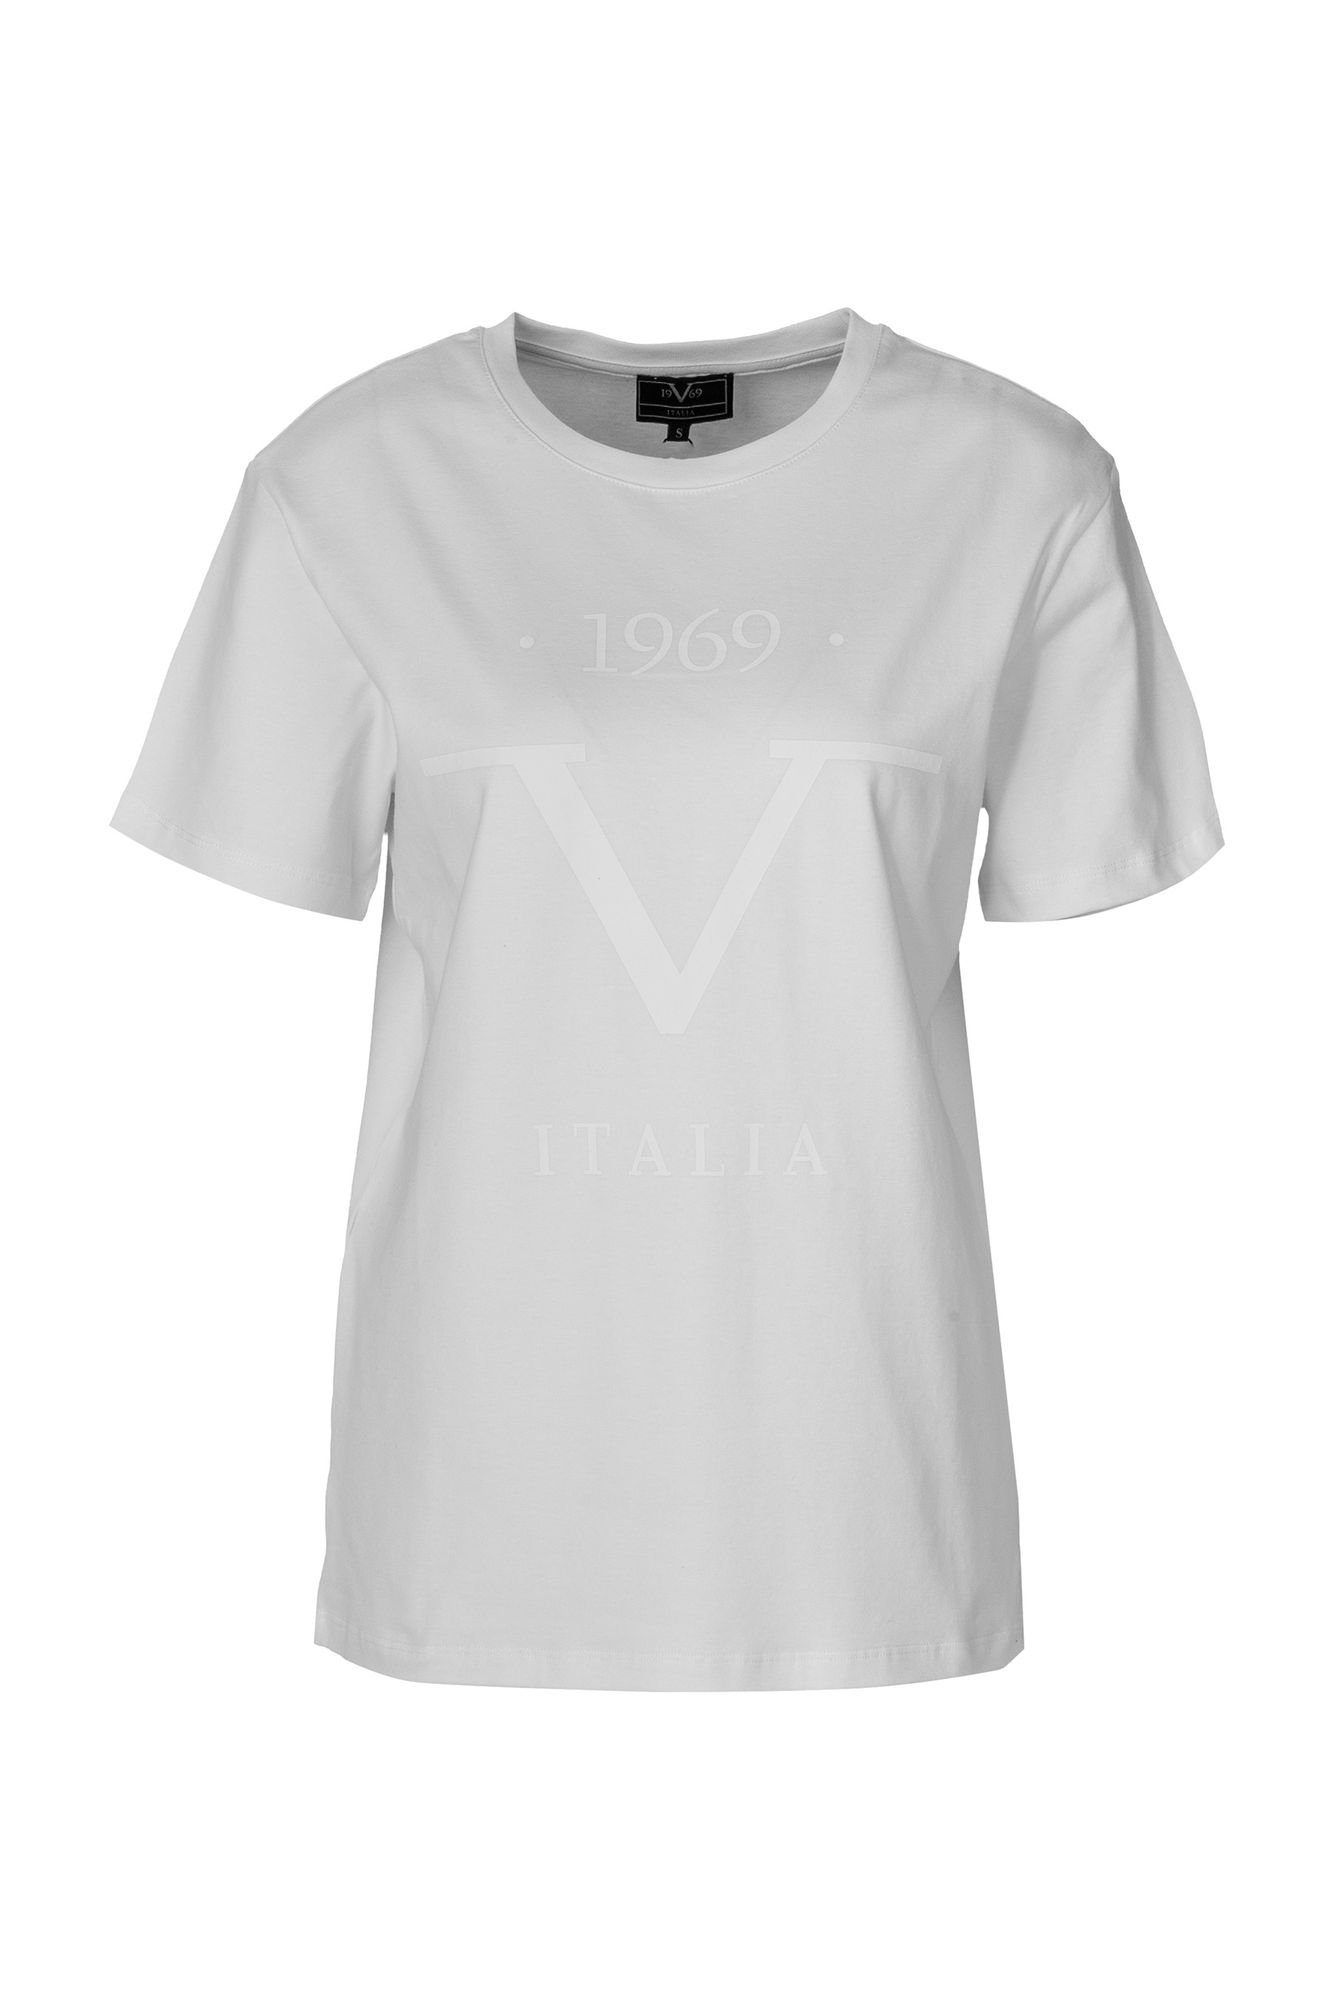 19V69 Italia by Versace T-Shirt Diego-033 mit Print